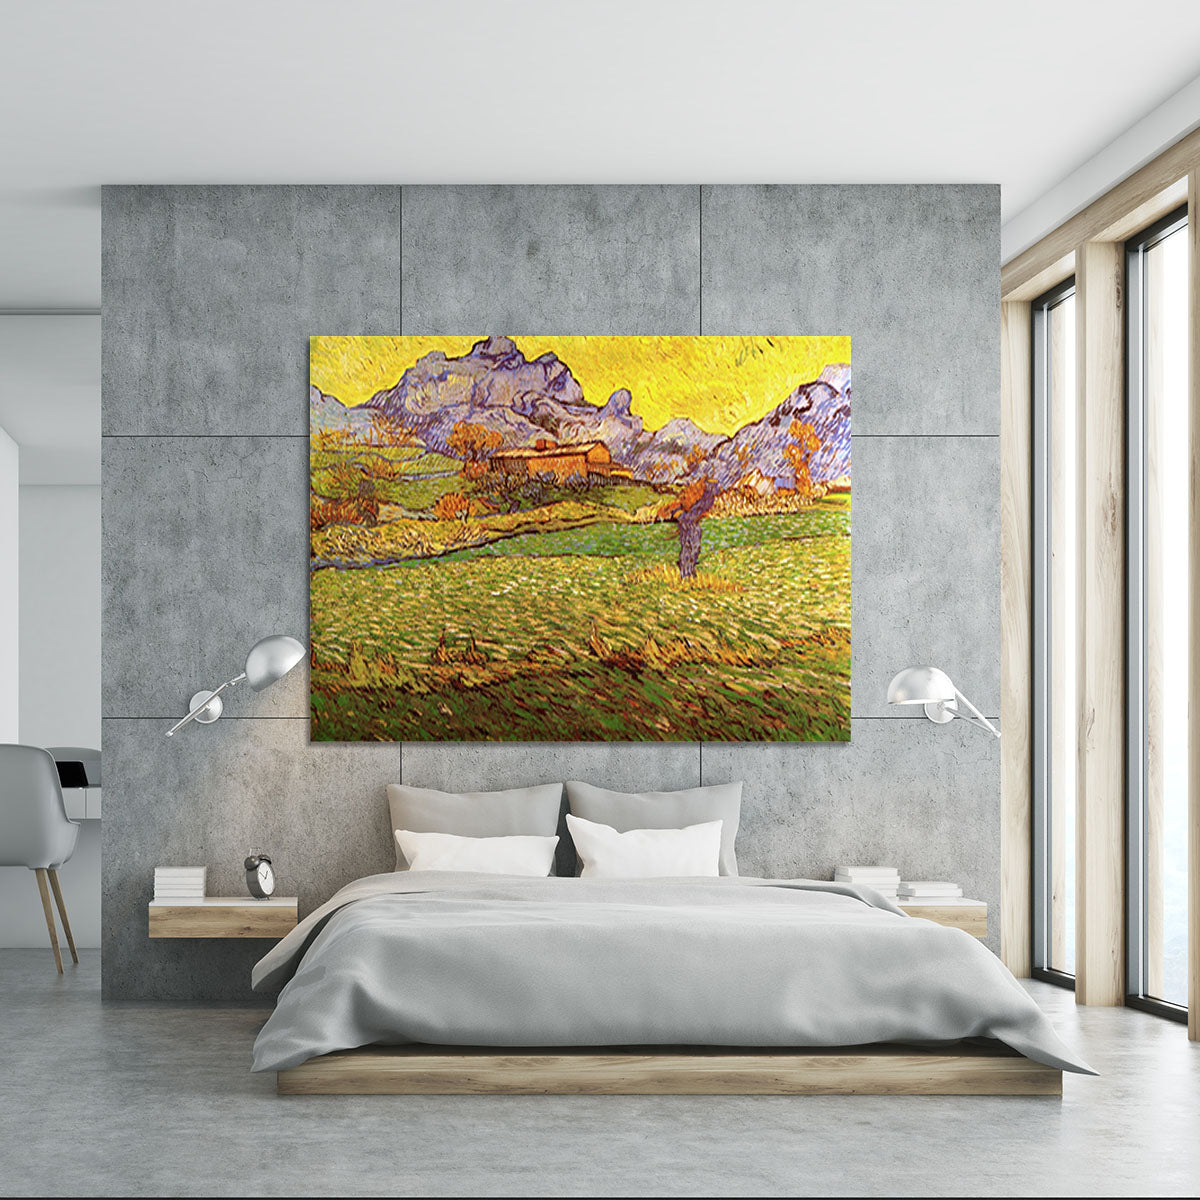 A Meadow in the Mountains Le Mas de Saint-Paul by Van Gogh Canvas Print or Poster - Canvas Art Rocks - 5